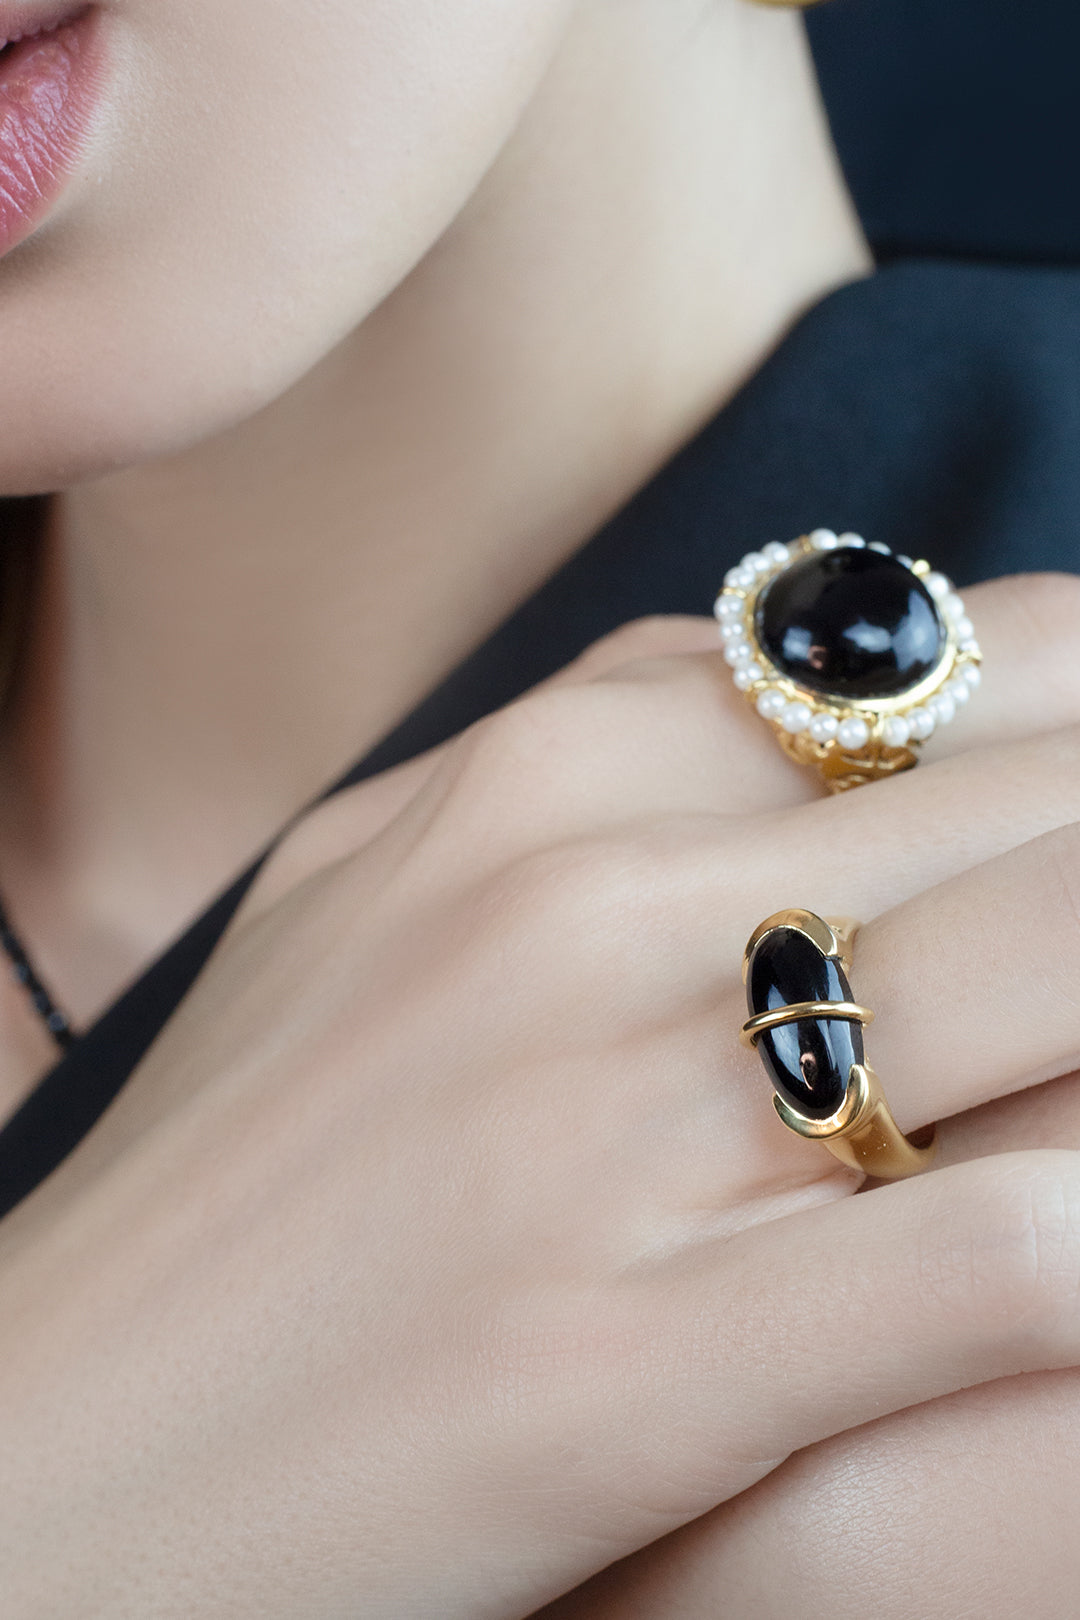 Dawn Black Onyx Gold Signet Ring Mamour Paris Jewelry